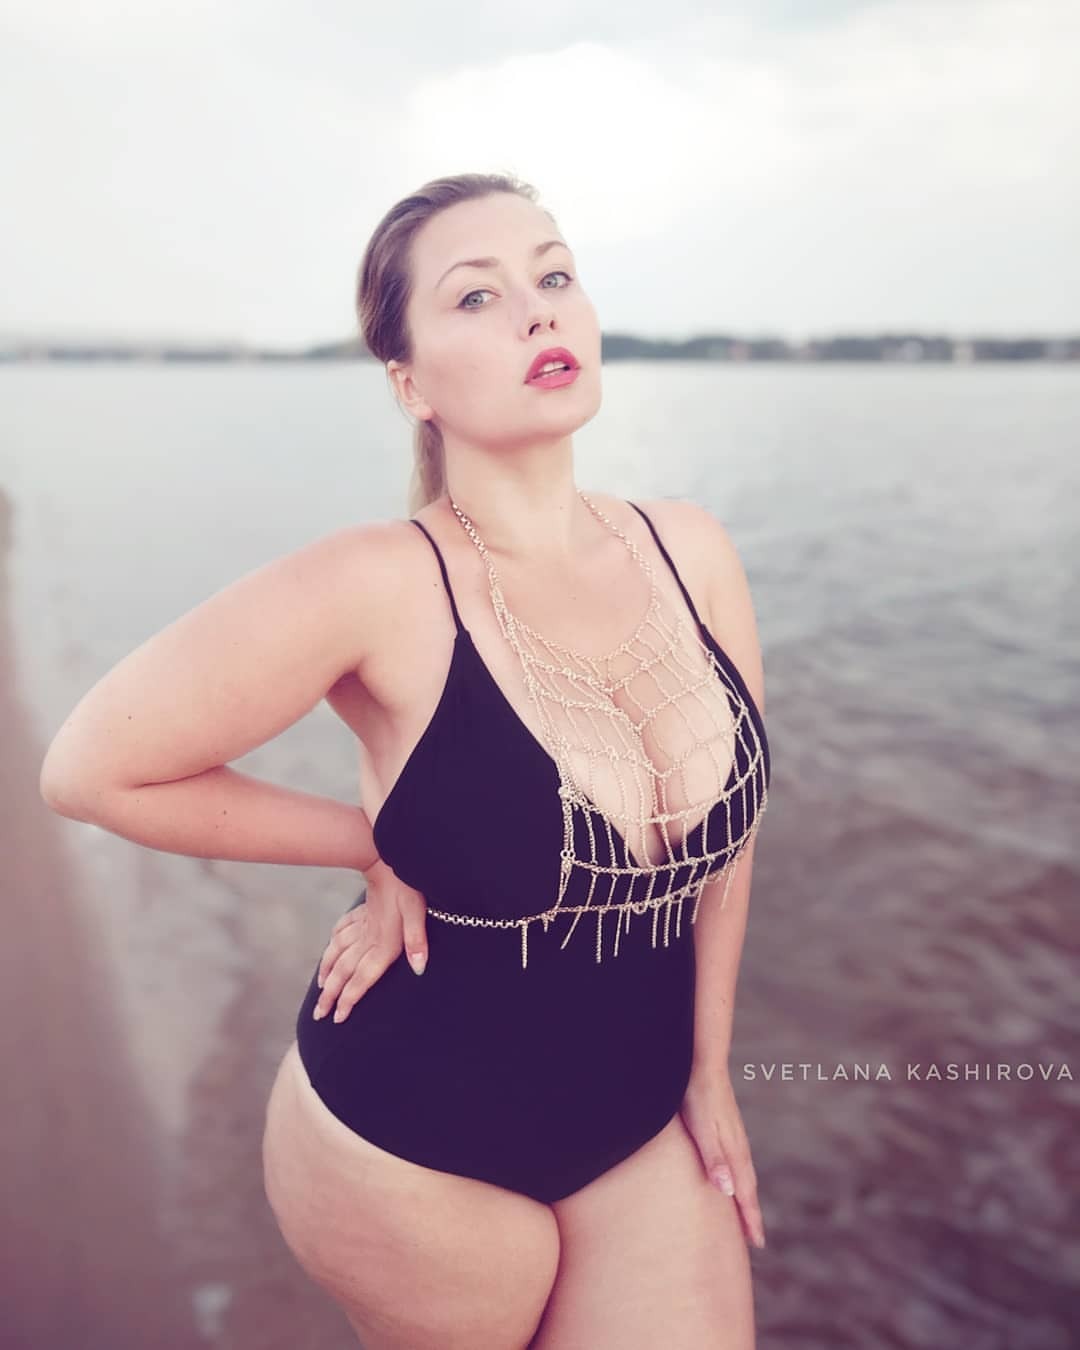 Svetlana Kashilrova Xxx Videos - Russian curvy models, plus size beauty